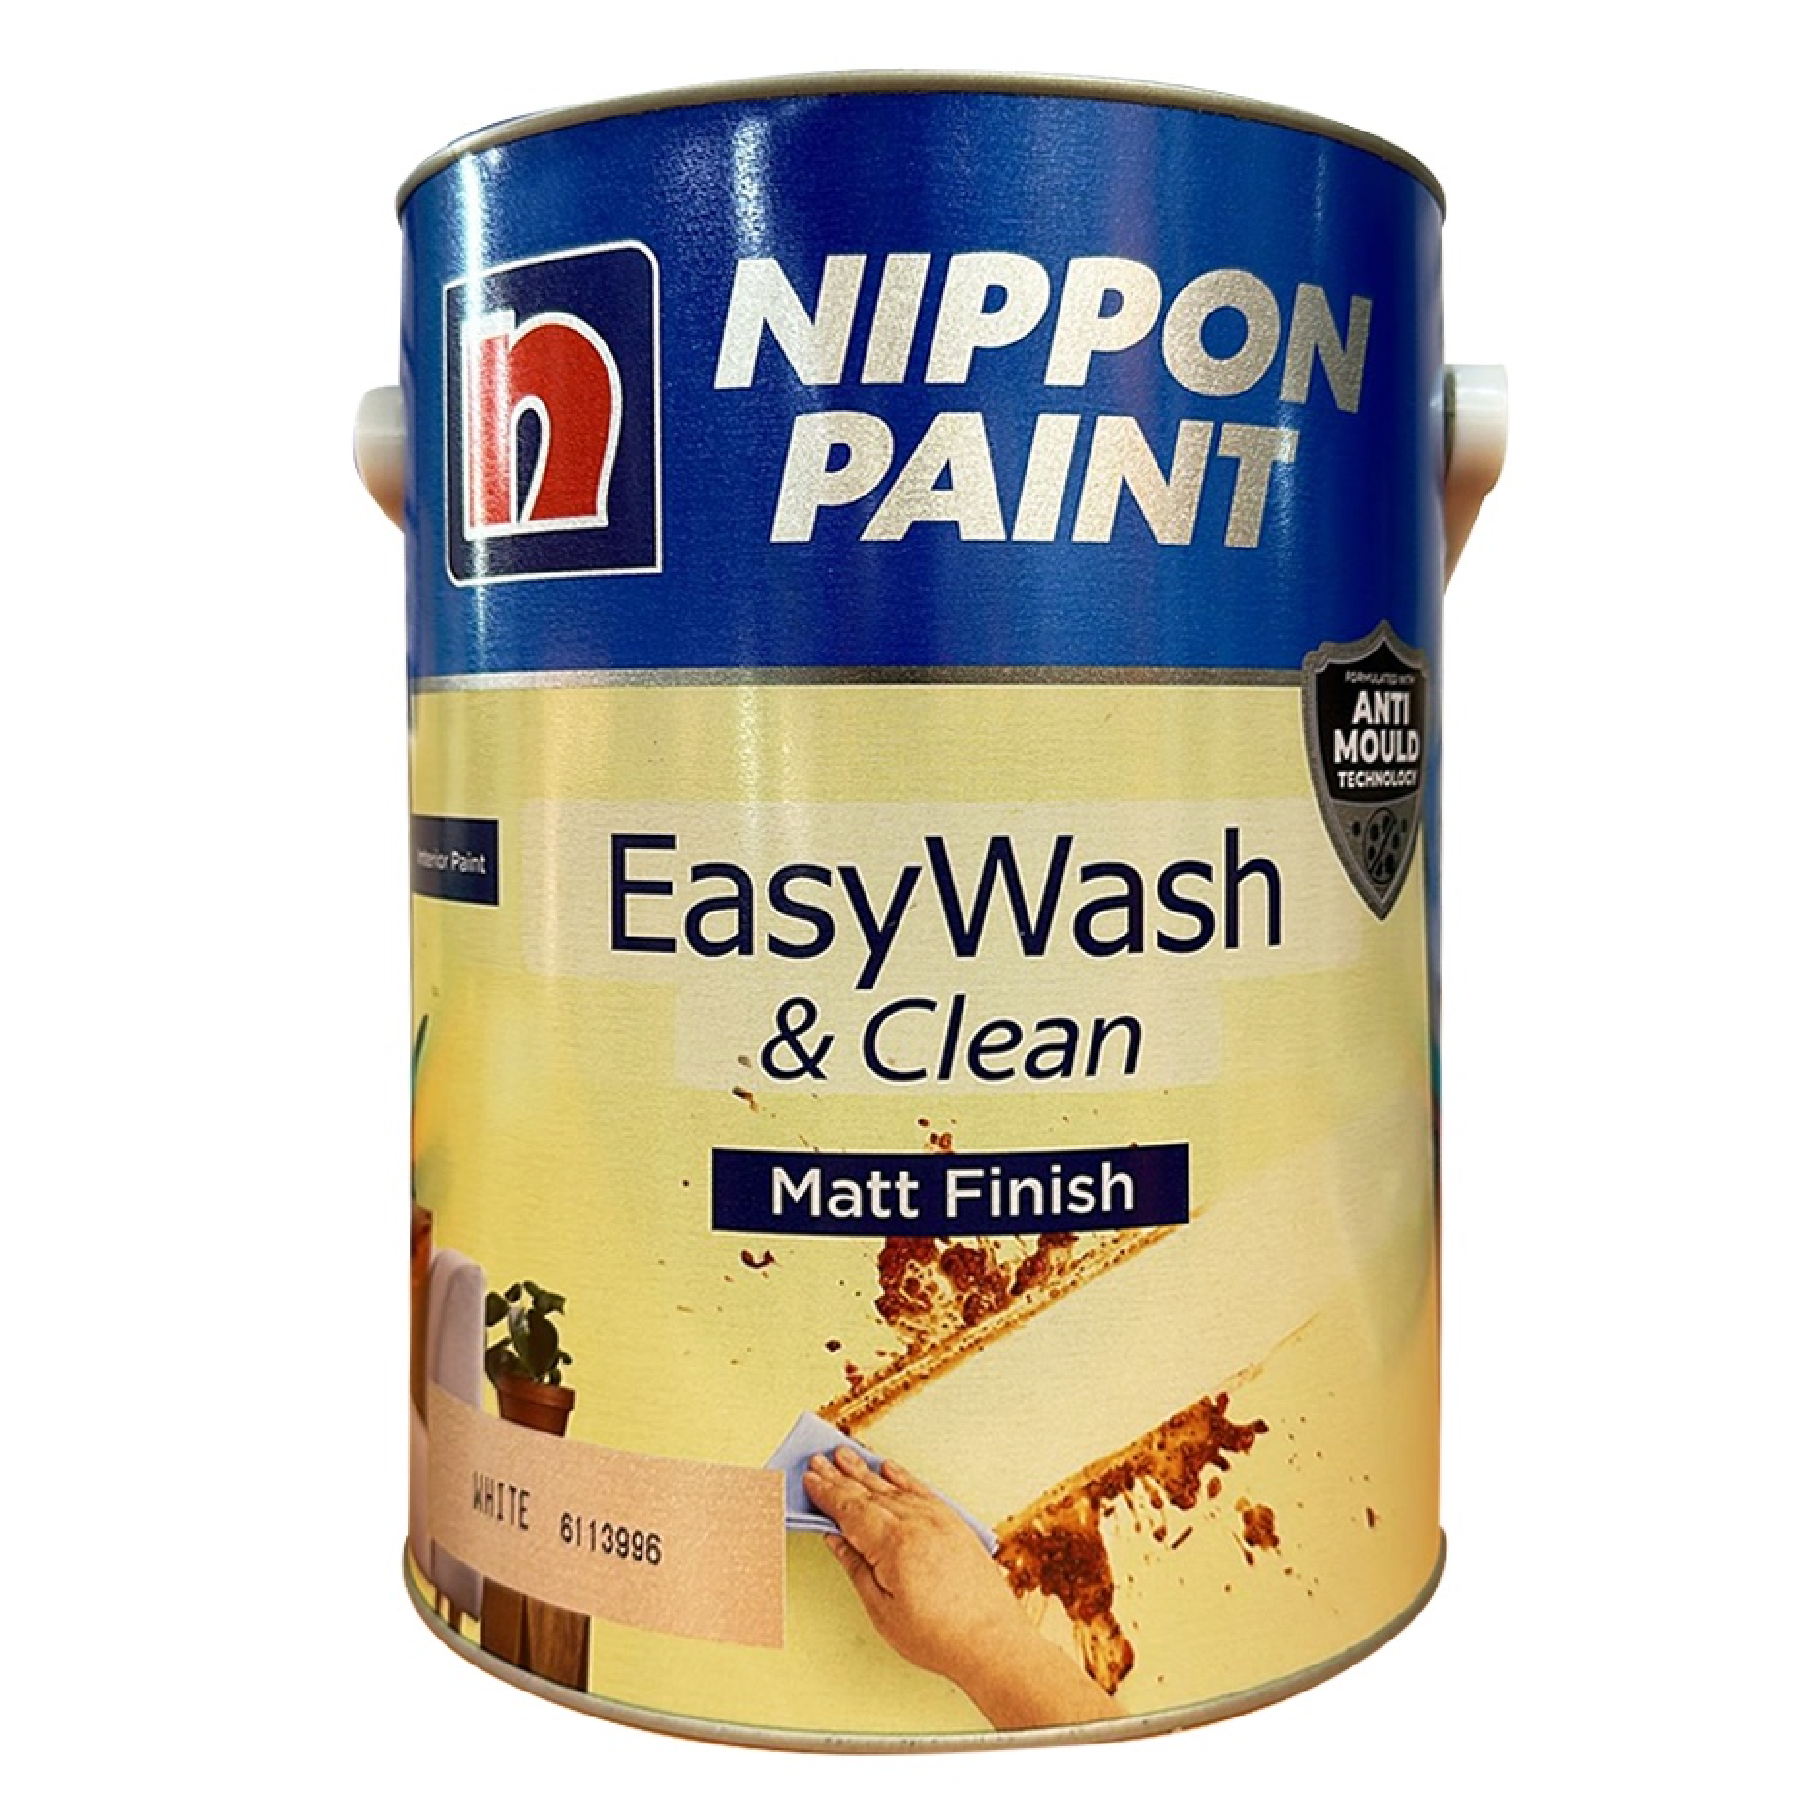 Nippon Paint EASYWASH & CLEAN (MATT FINISH) 5L